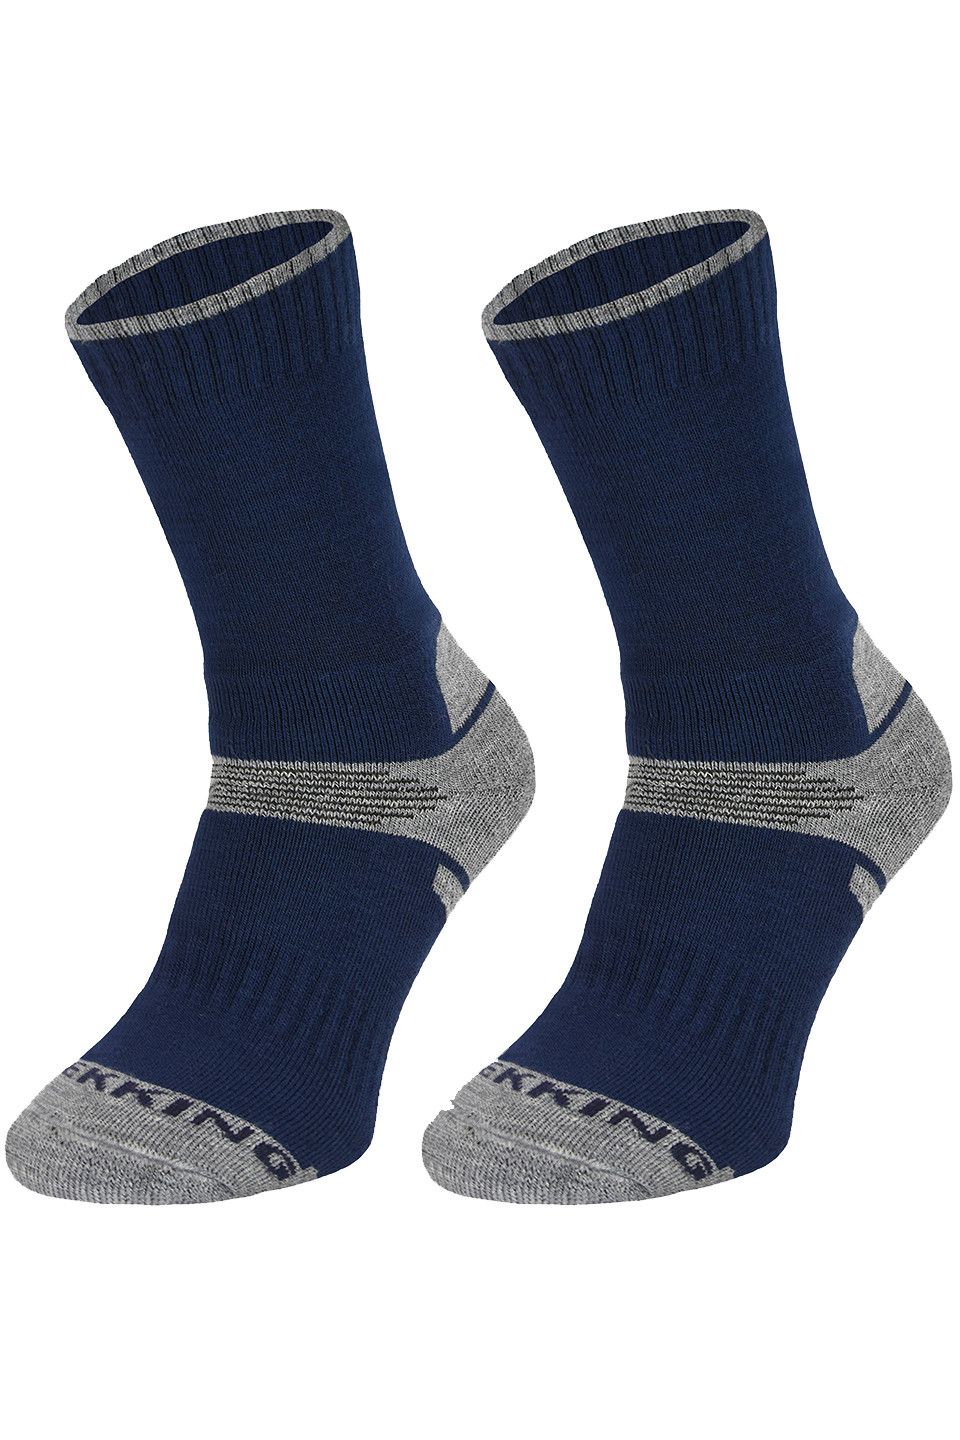 Шкарпетки дитячі COMODO JUNIOR (STJ) navy02 27-30